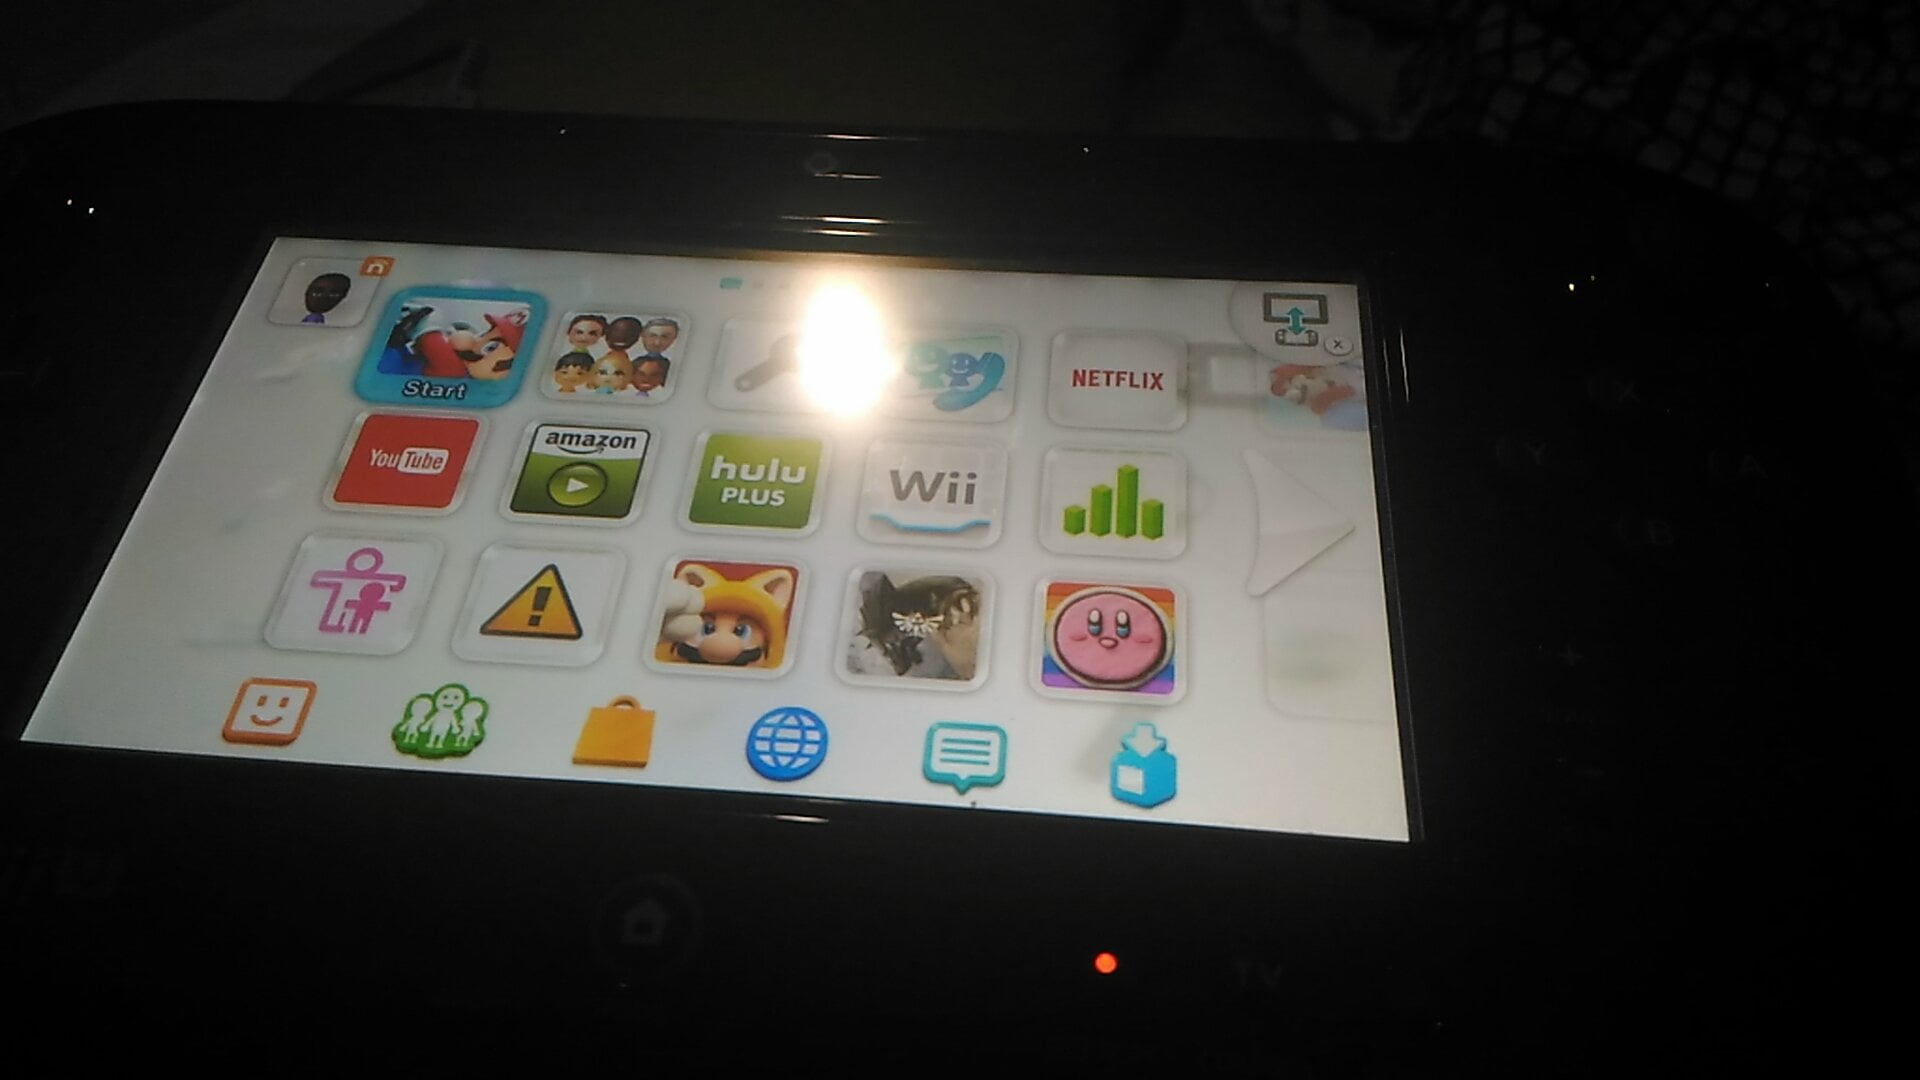 Download Wii U Games / Updates For USB Y Mod Install Using Wii U